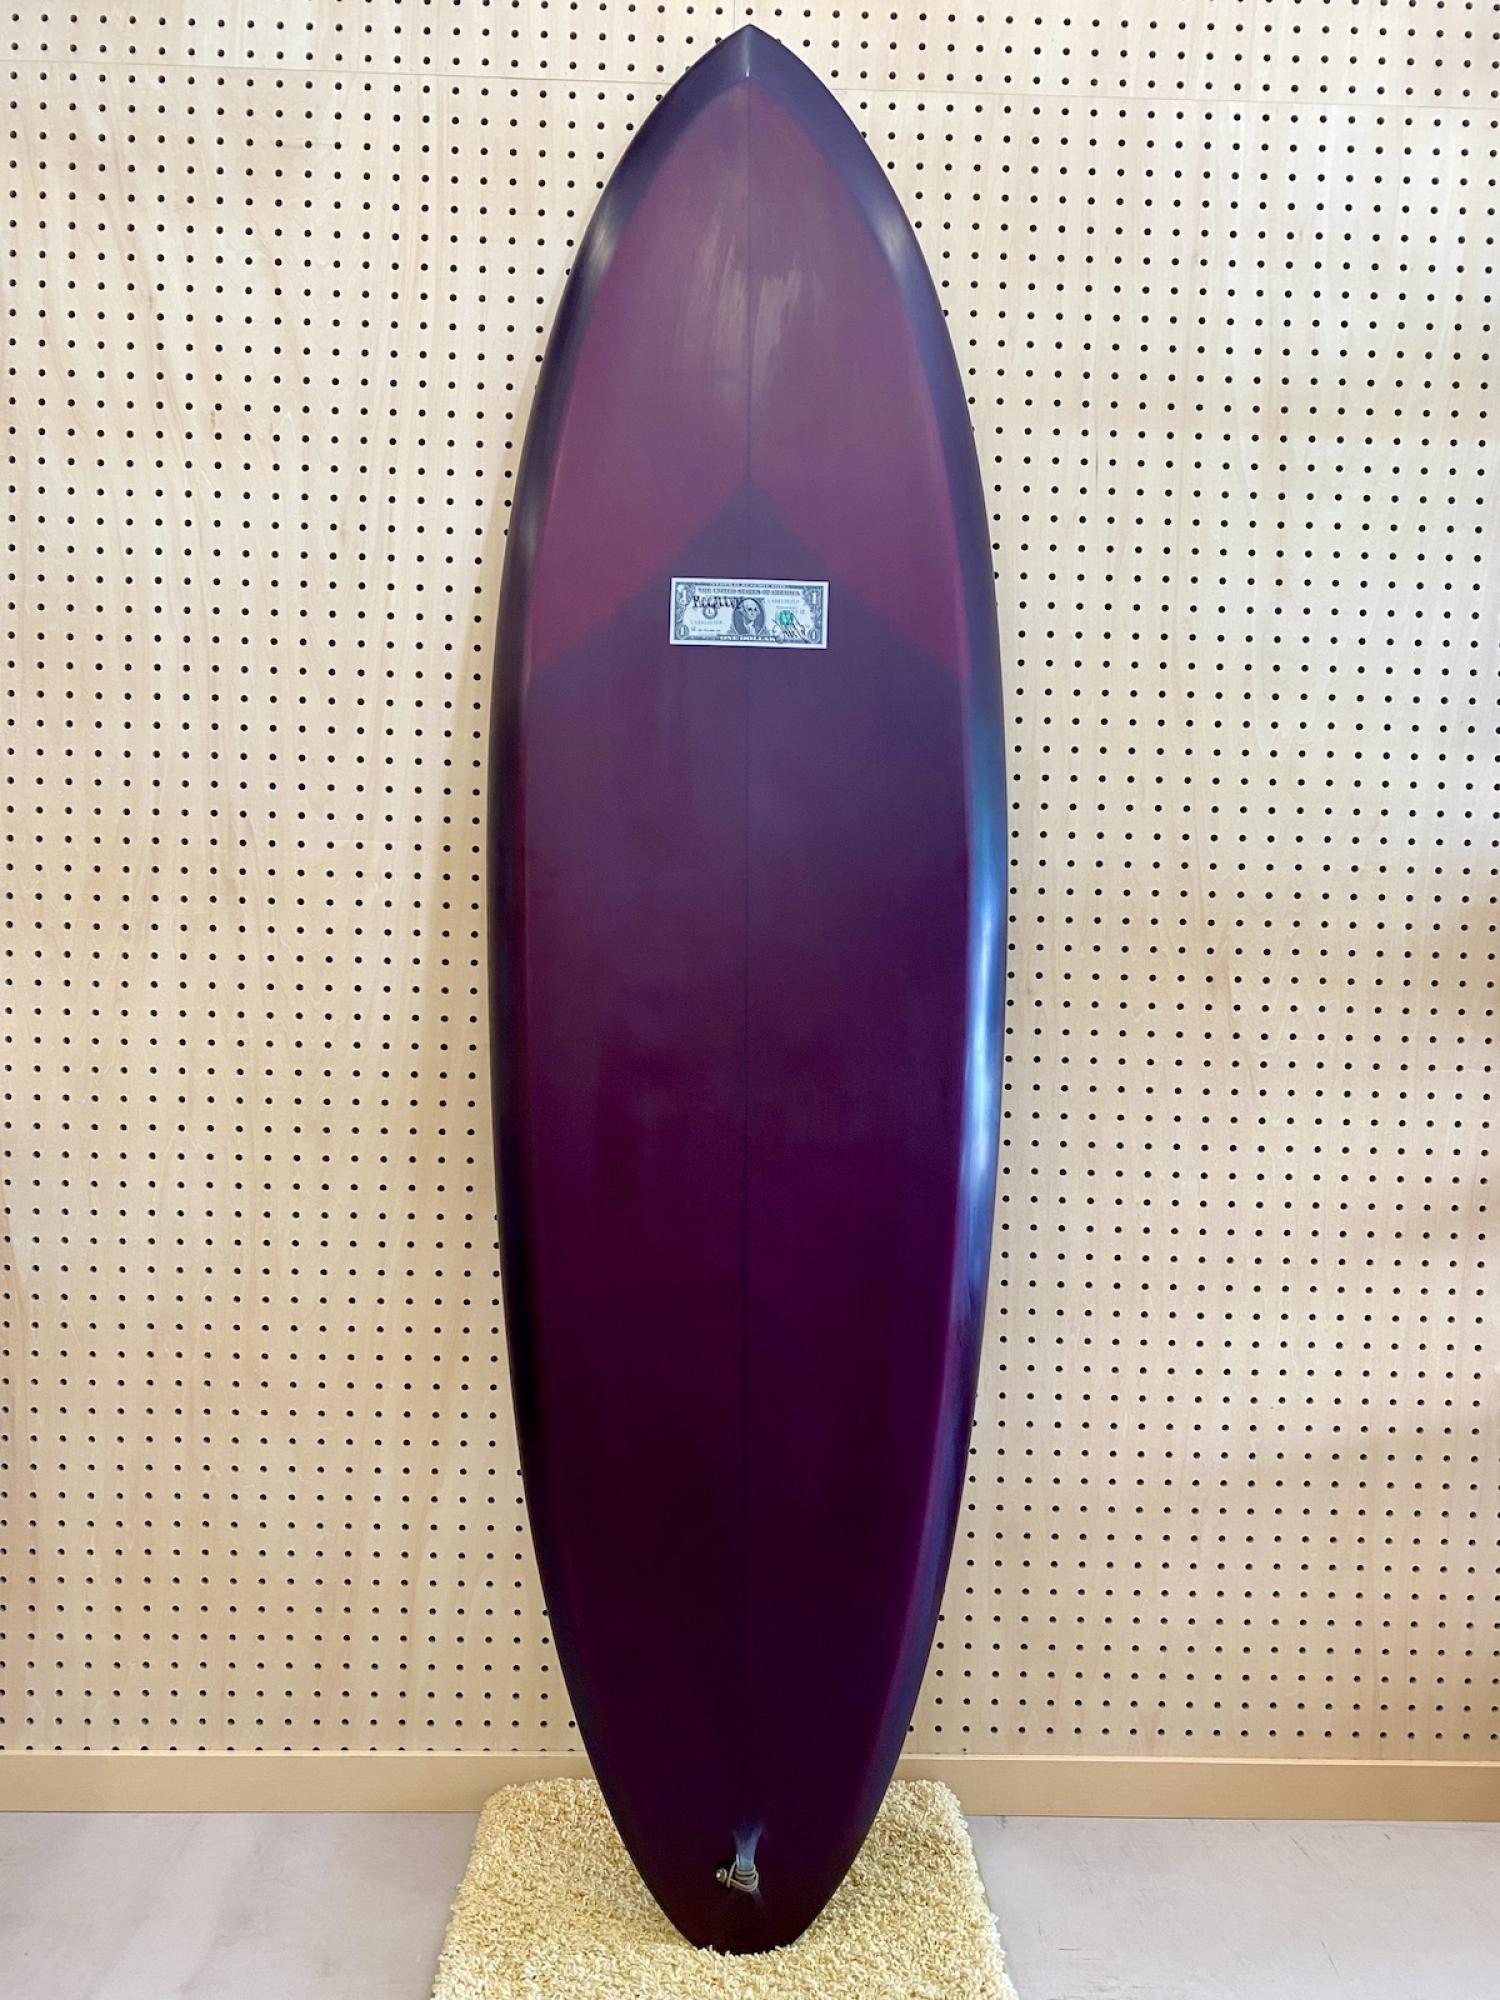 Mccallum Surfboards|site_title